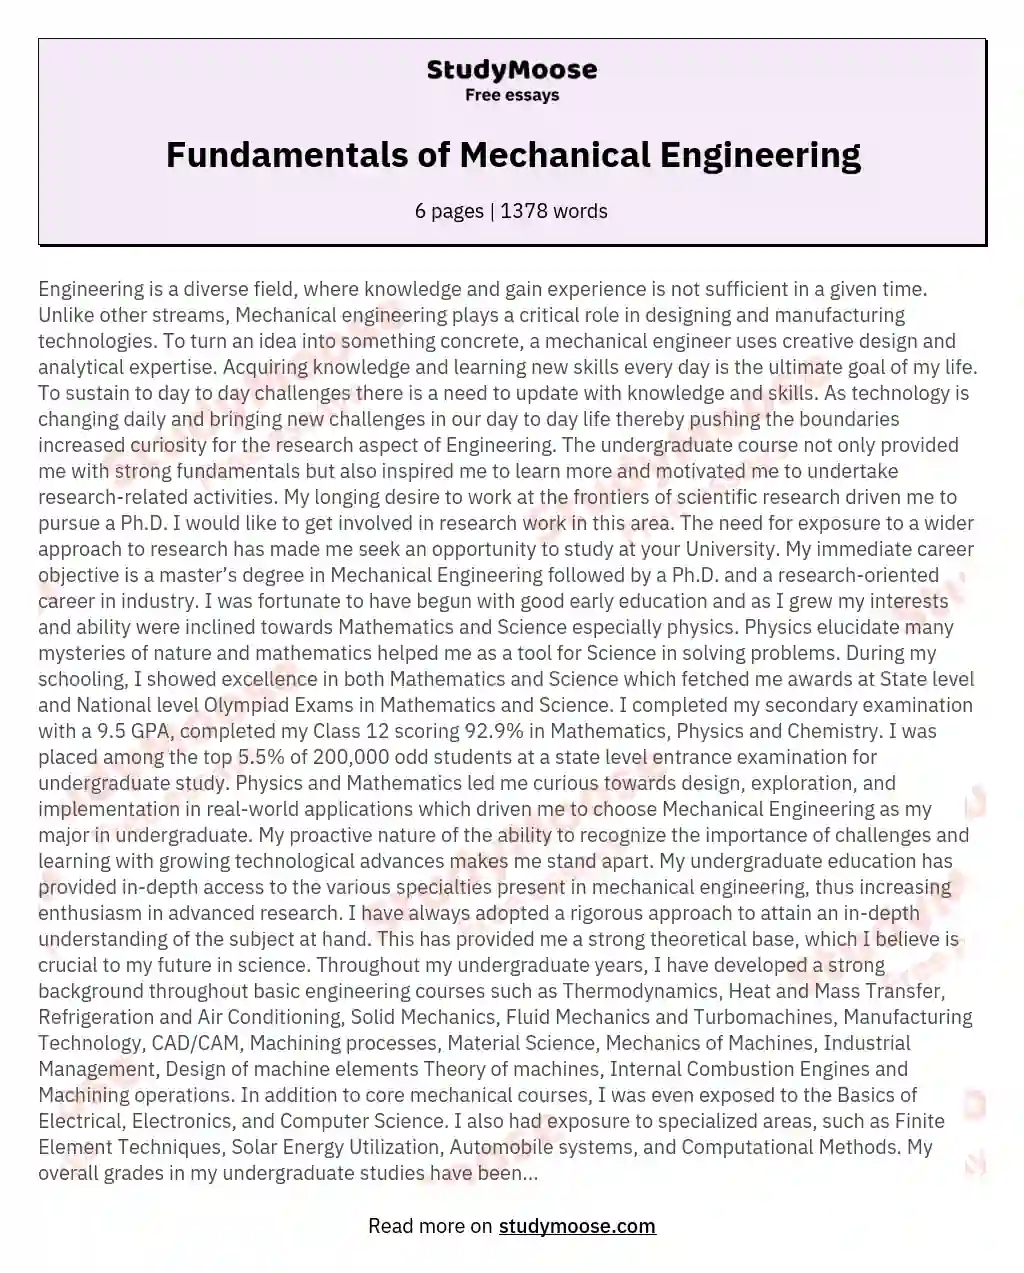 Fundamentals of Mechanical Engineering essay